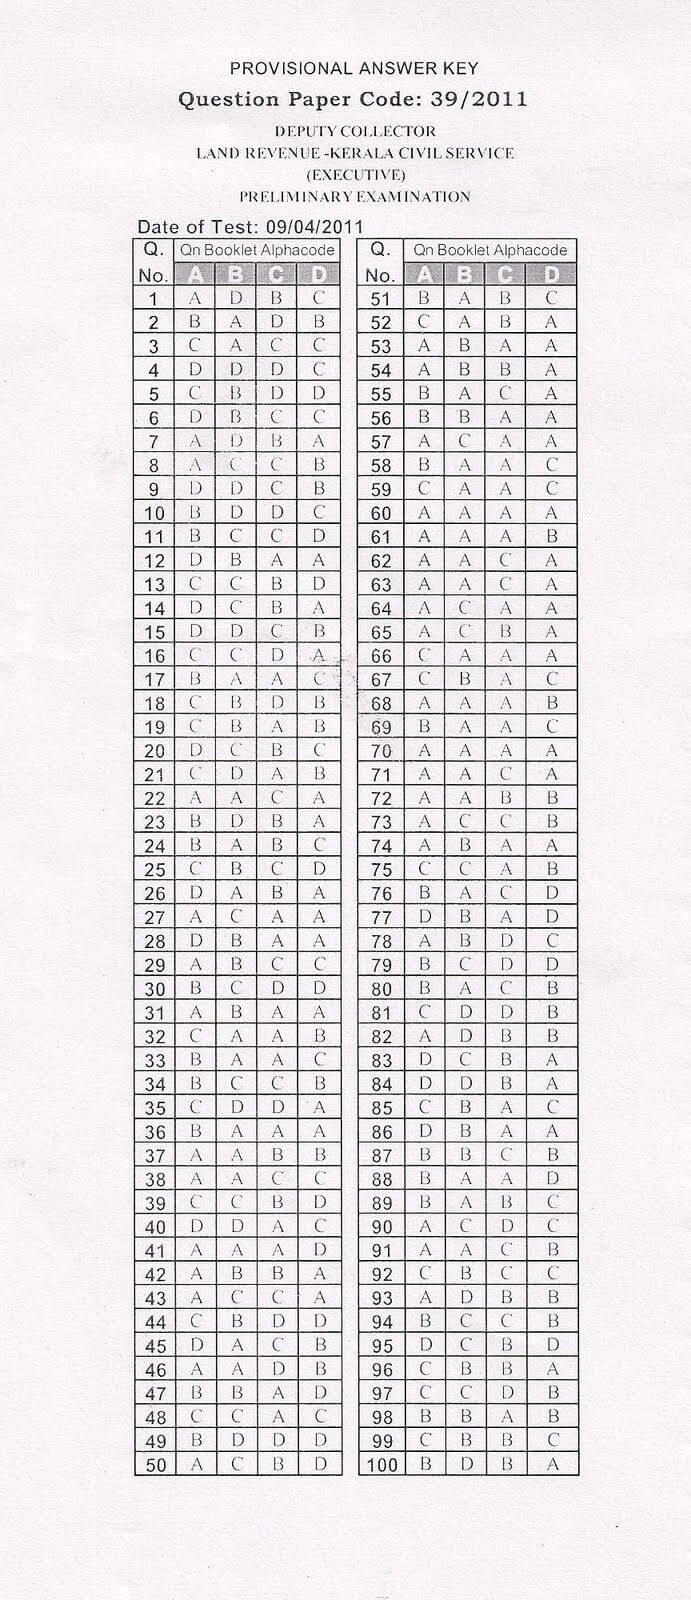 Printable 100 Bubble Answer Sheet | Answer Sheet Template 1 For Blank Answer Sheet Template 1 100